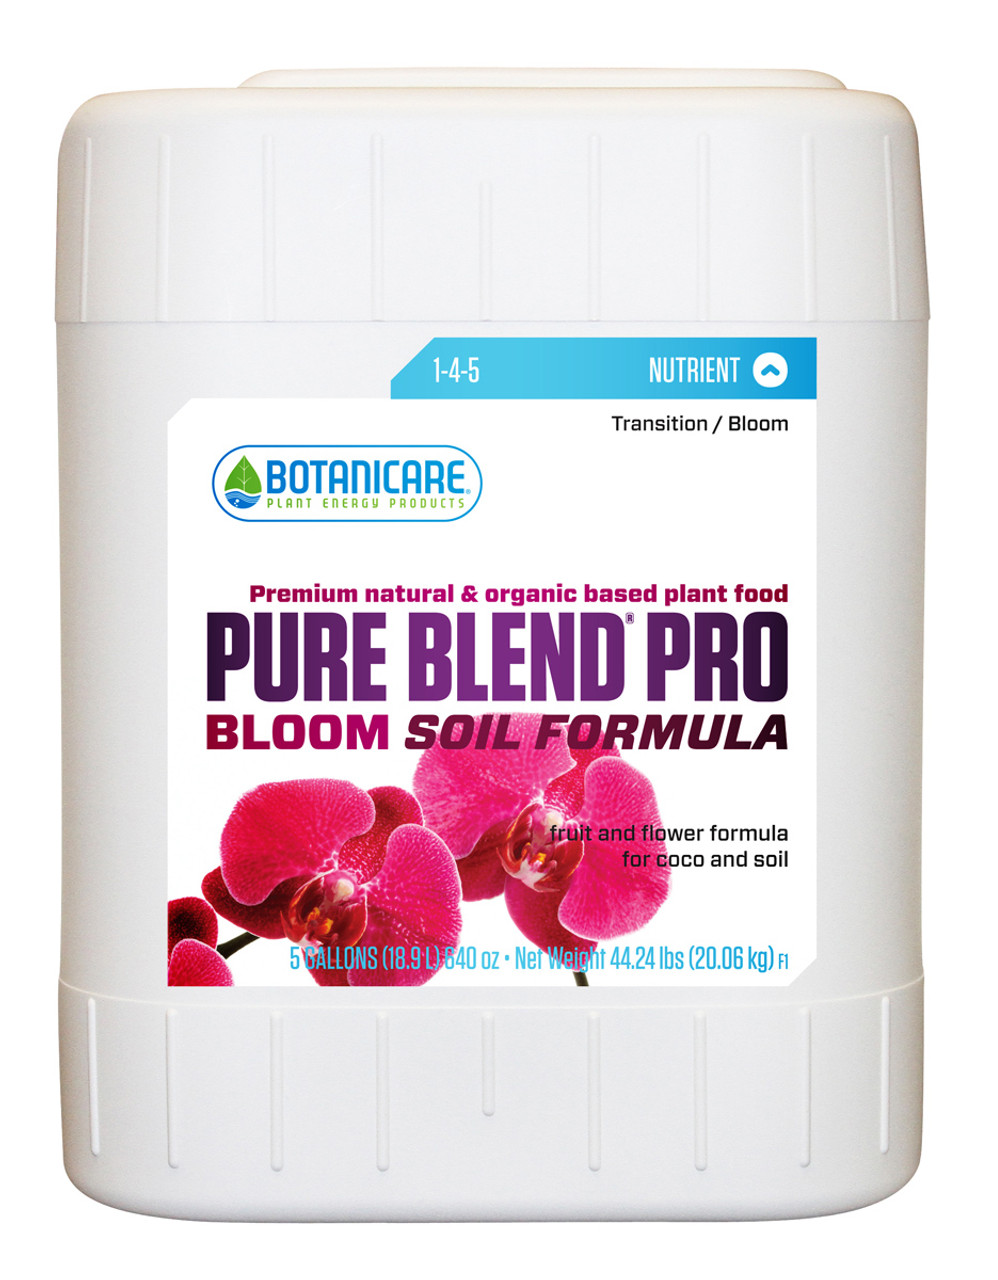 Botanicare Pure Blend Pro Bloom Soil Formula 5 Gallons